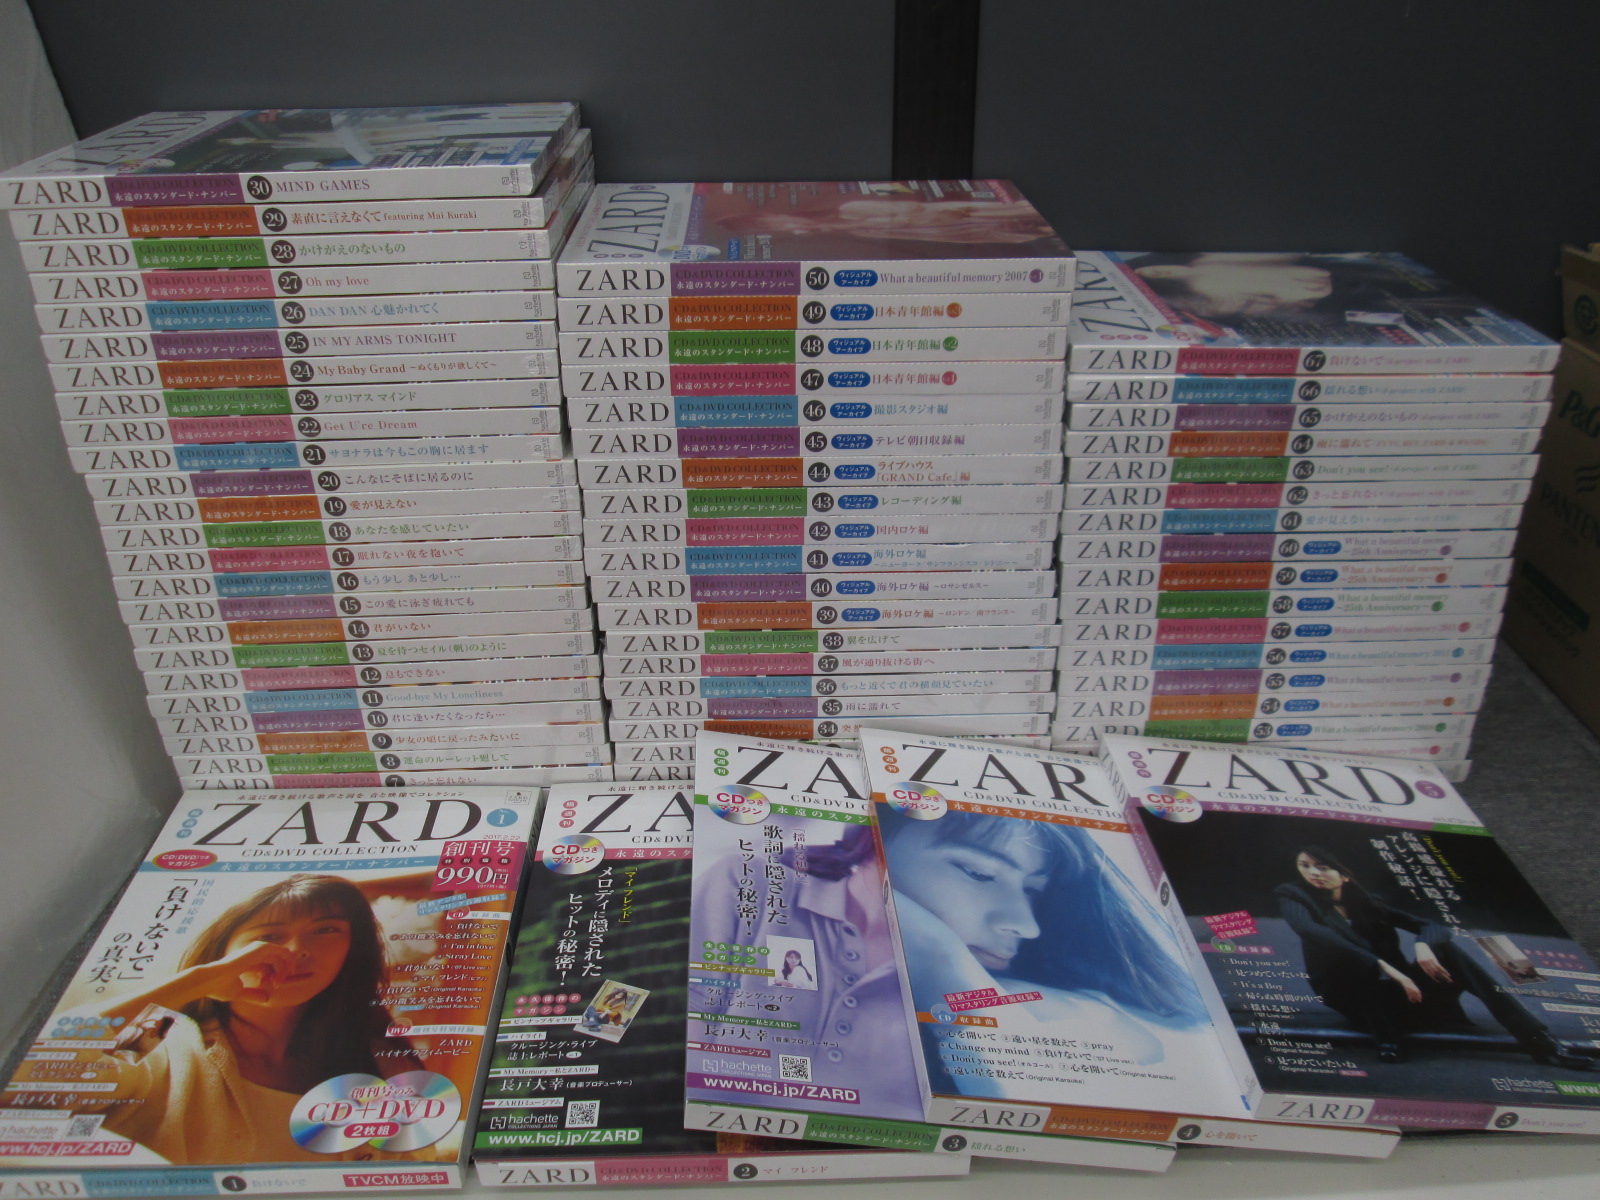 隔週刊ZARD CD &DVD COLLECTION 全巻 - CD